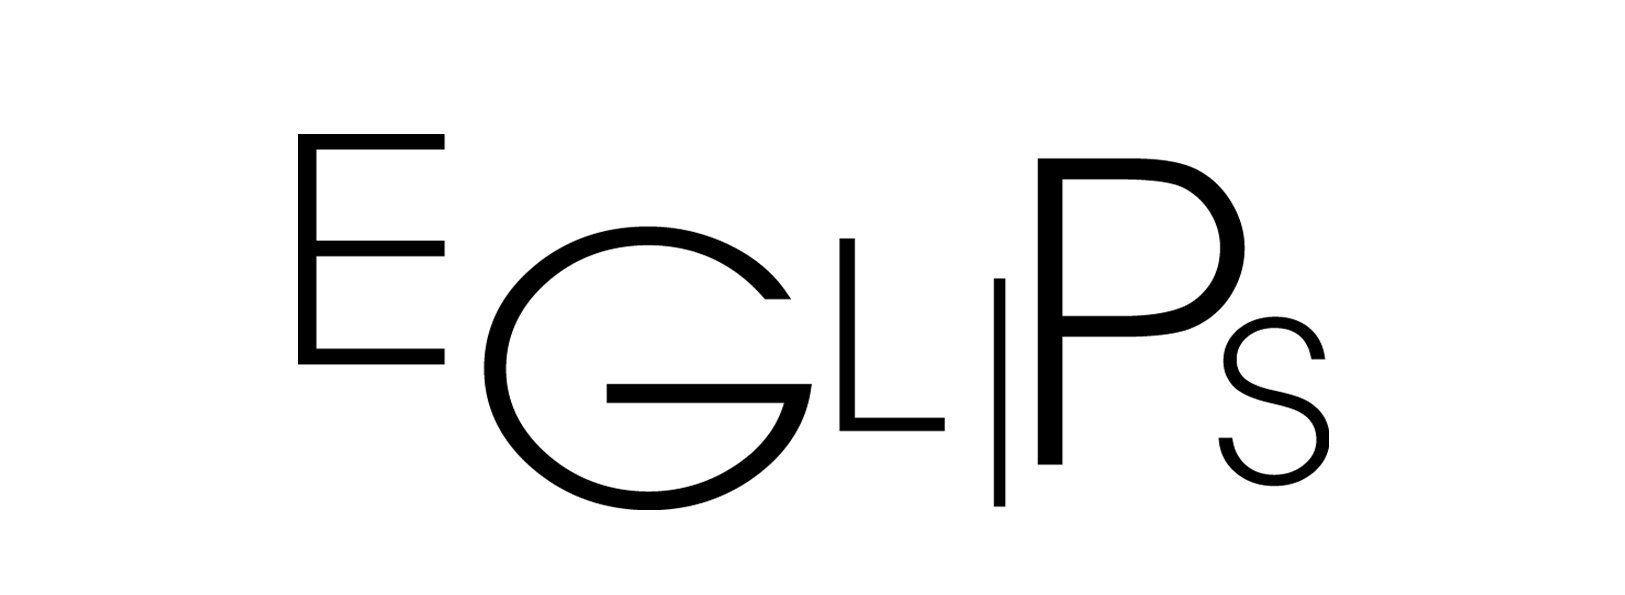 Logo thương hiệu Eglips (Nguồn: Internet).